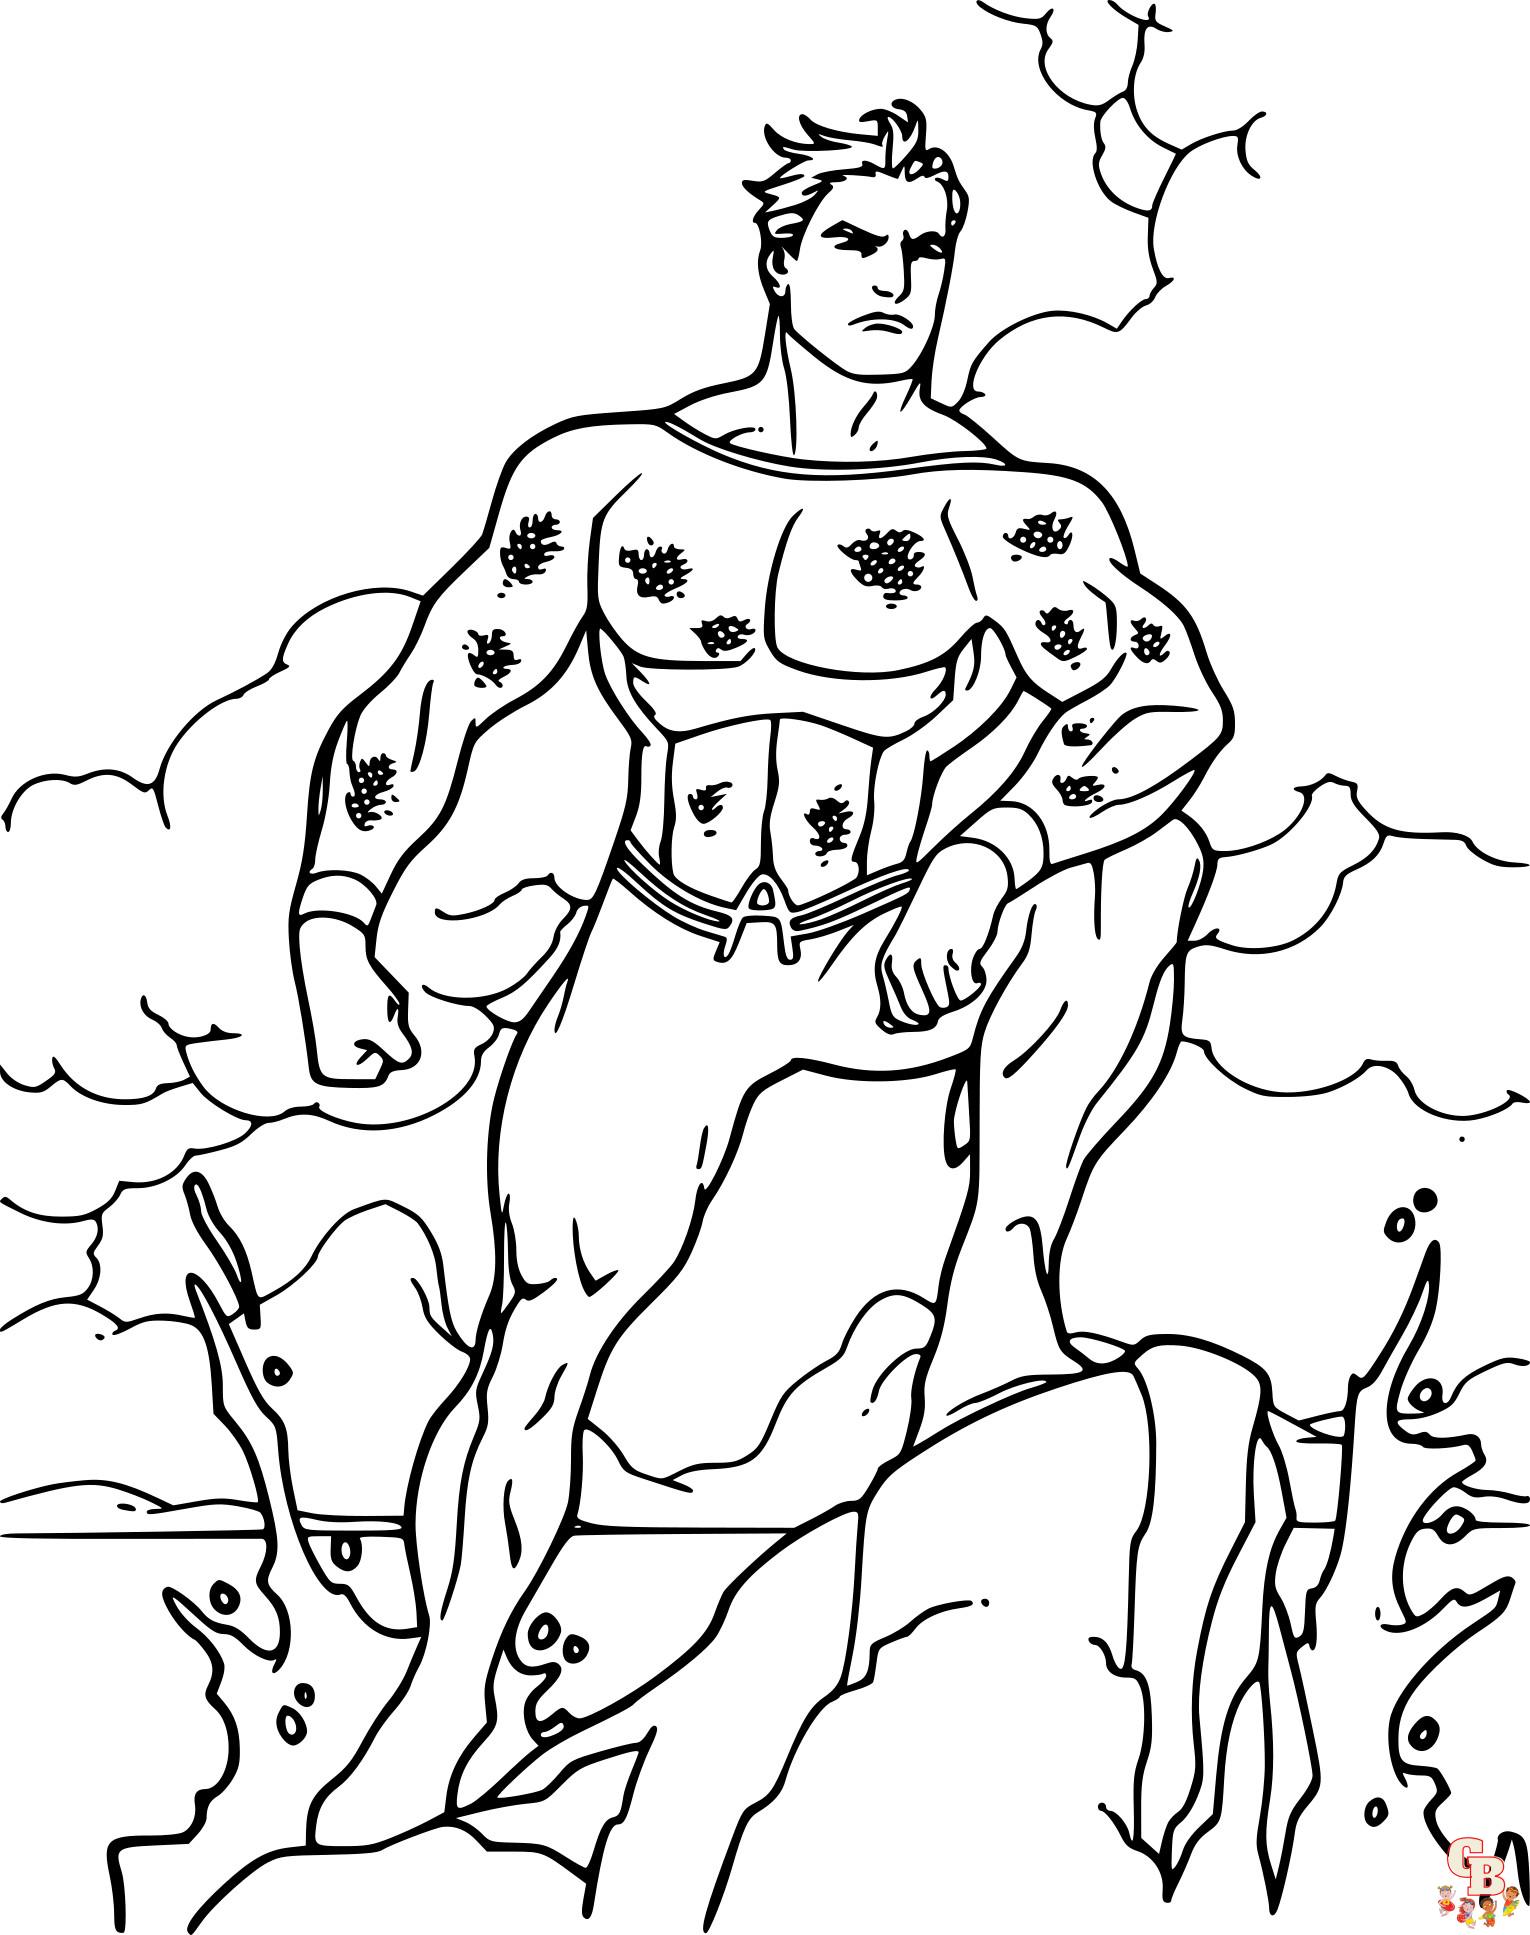 Aquaman boyama sayfası